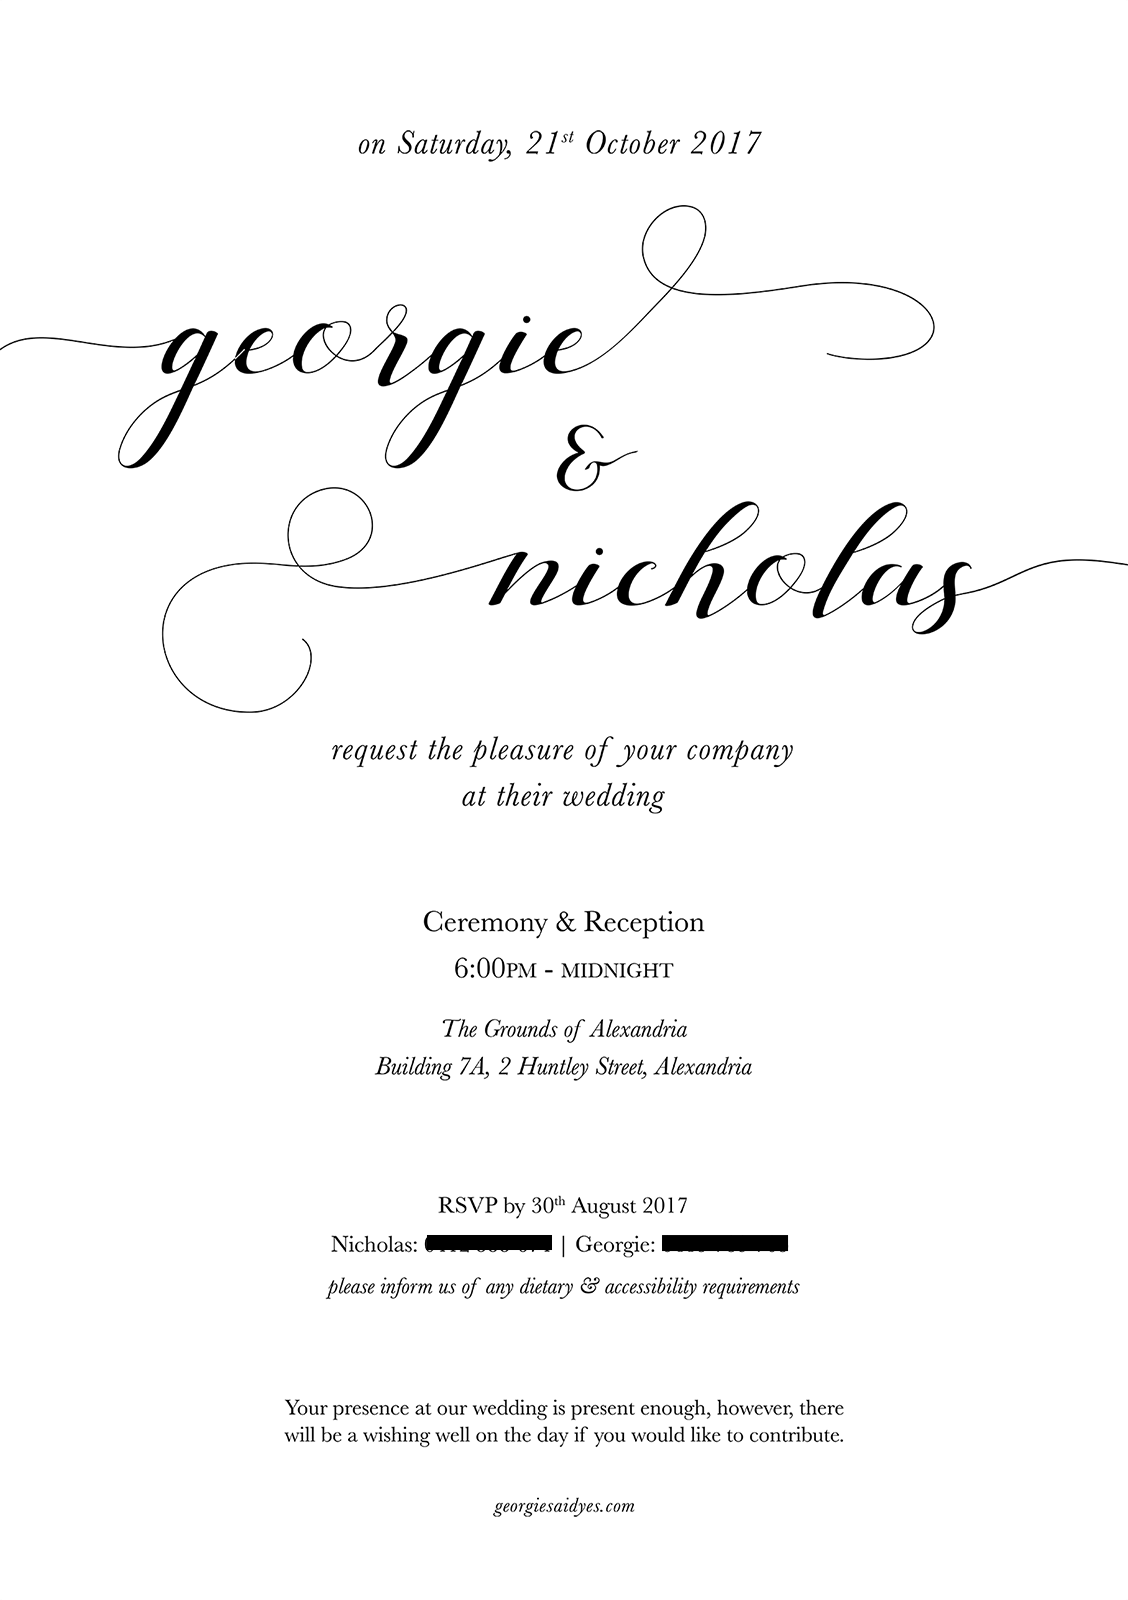 The design of a wedding invitation.